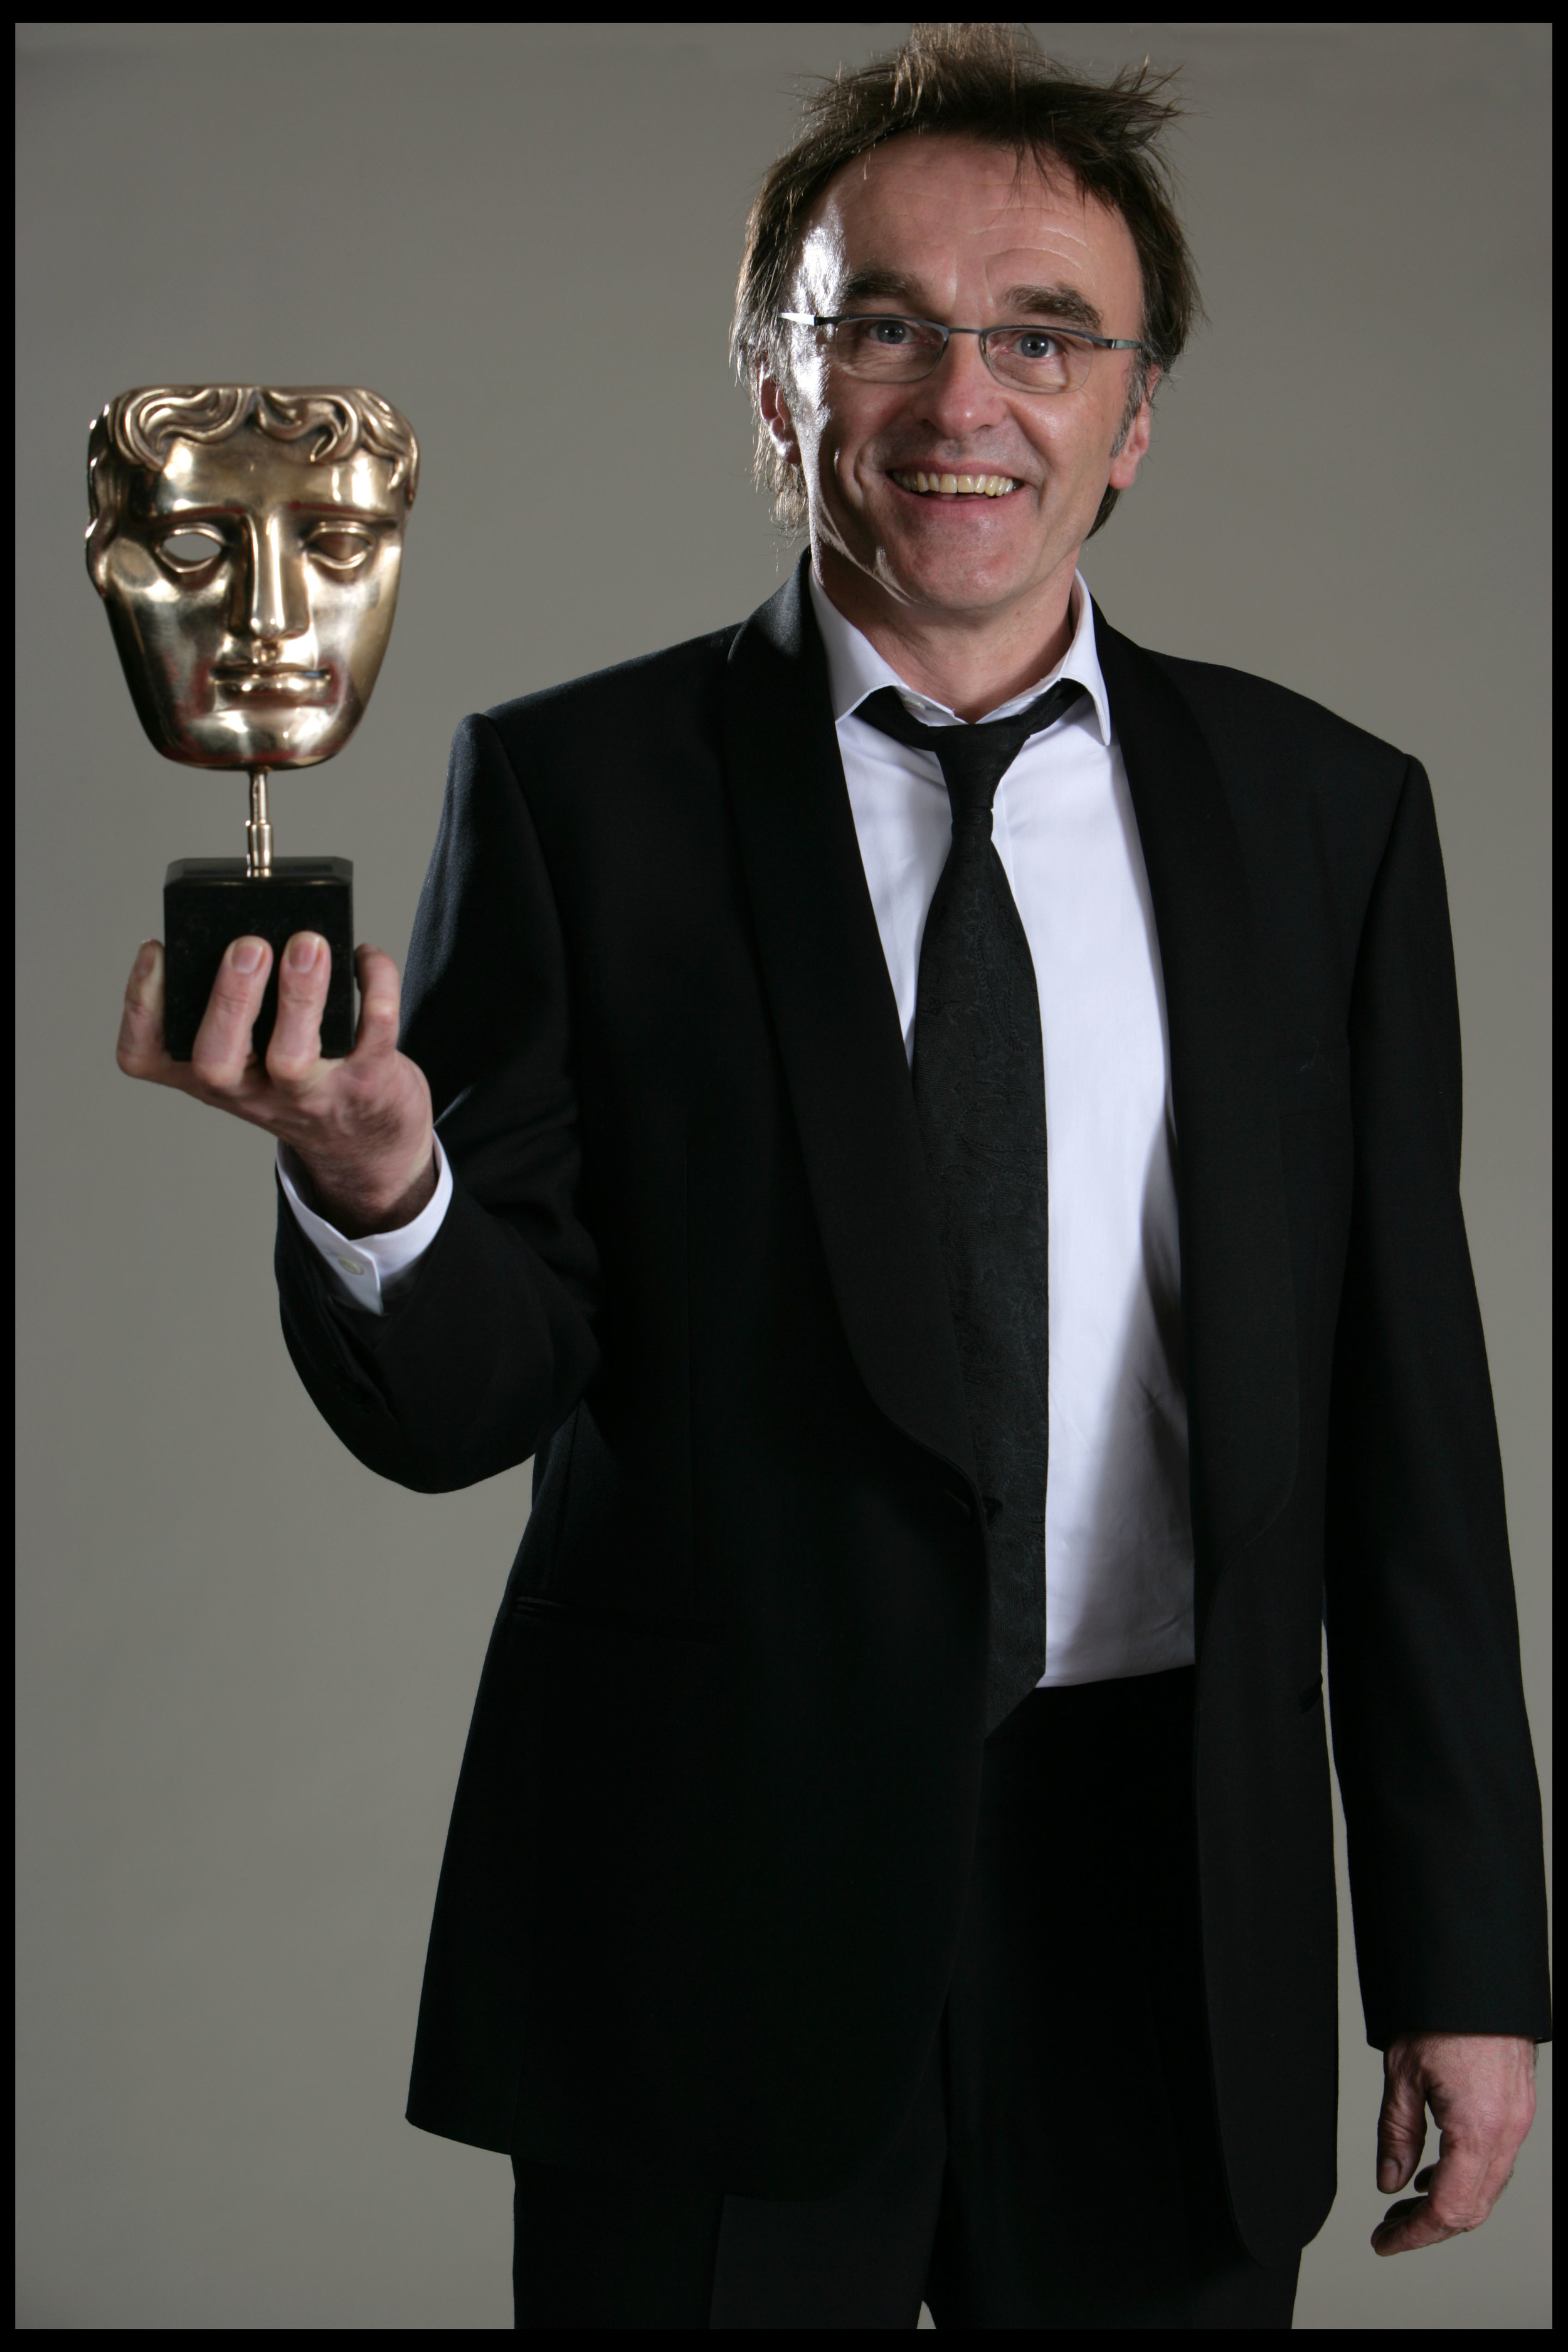 Danny Boyle, director